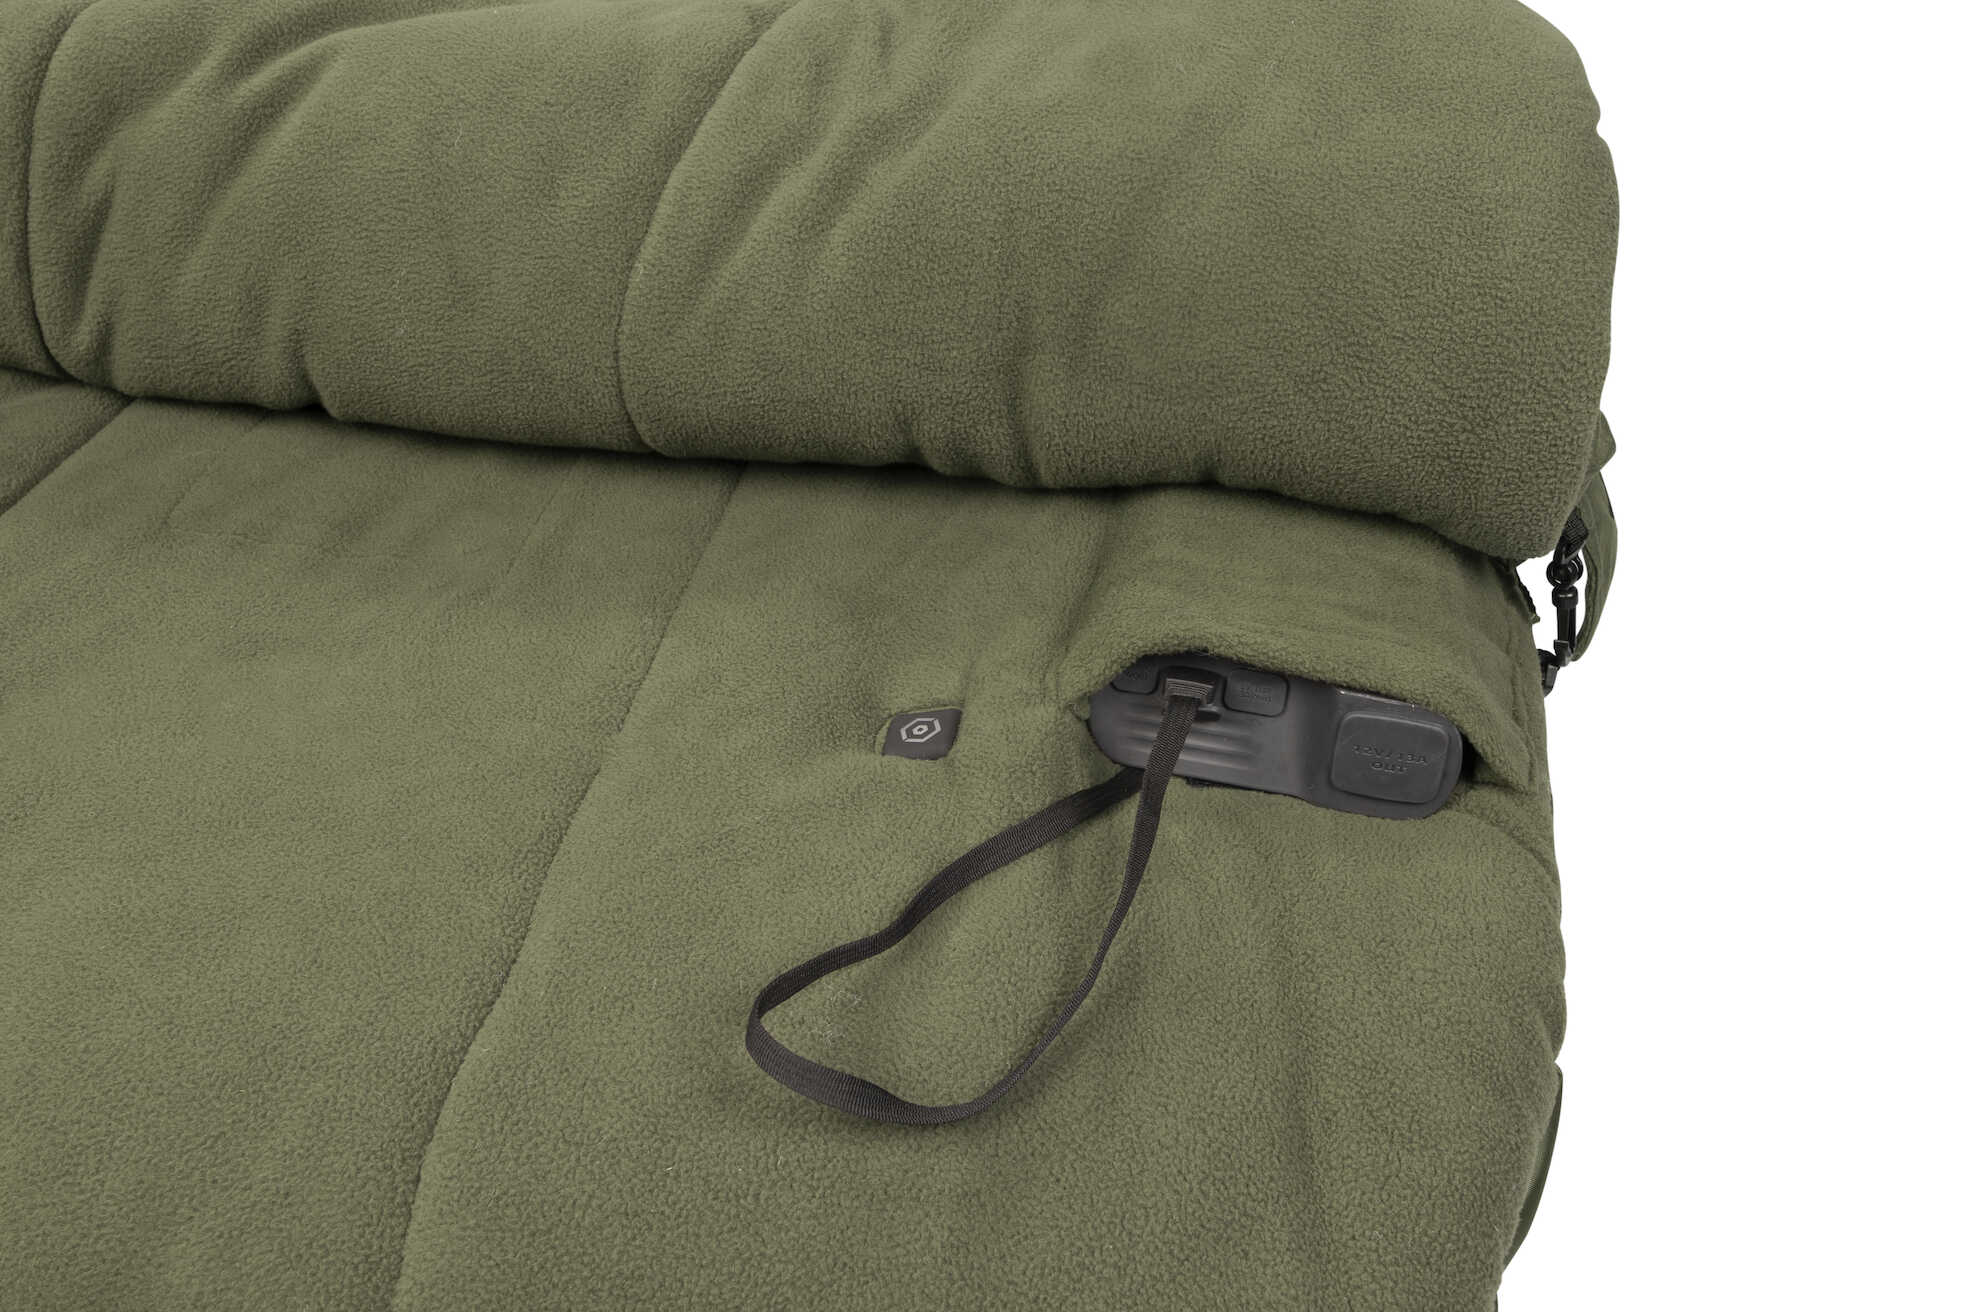 Avid Carp Benchmark ThermaTech Heated Sleeping Bag